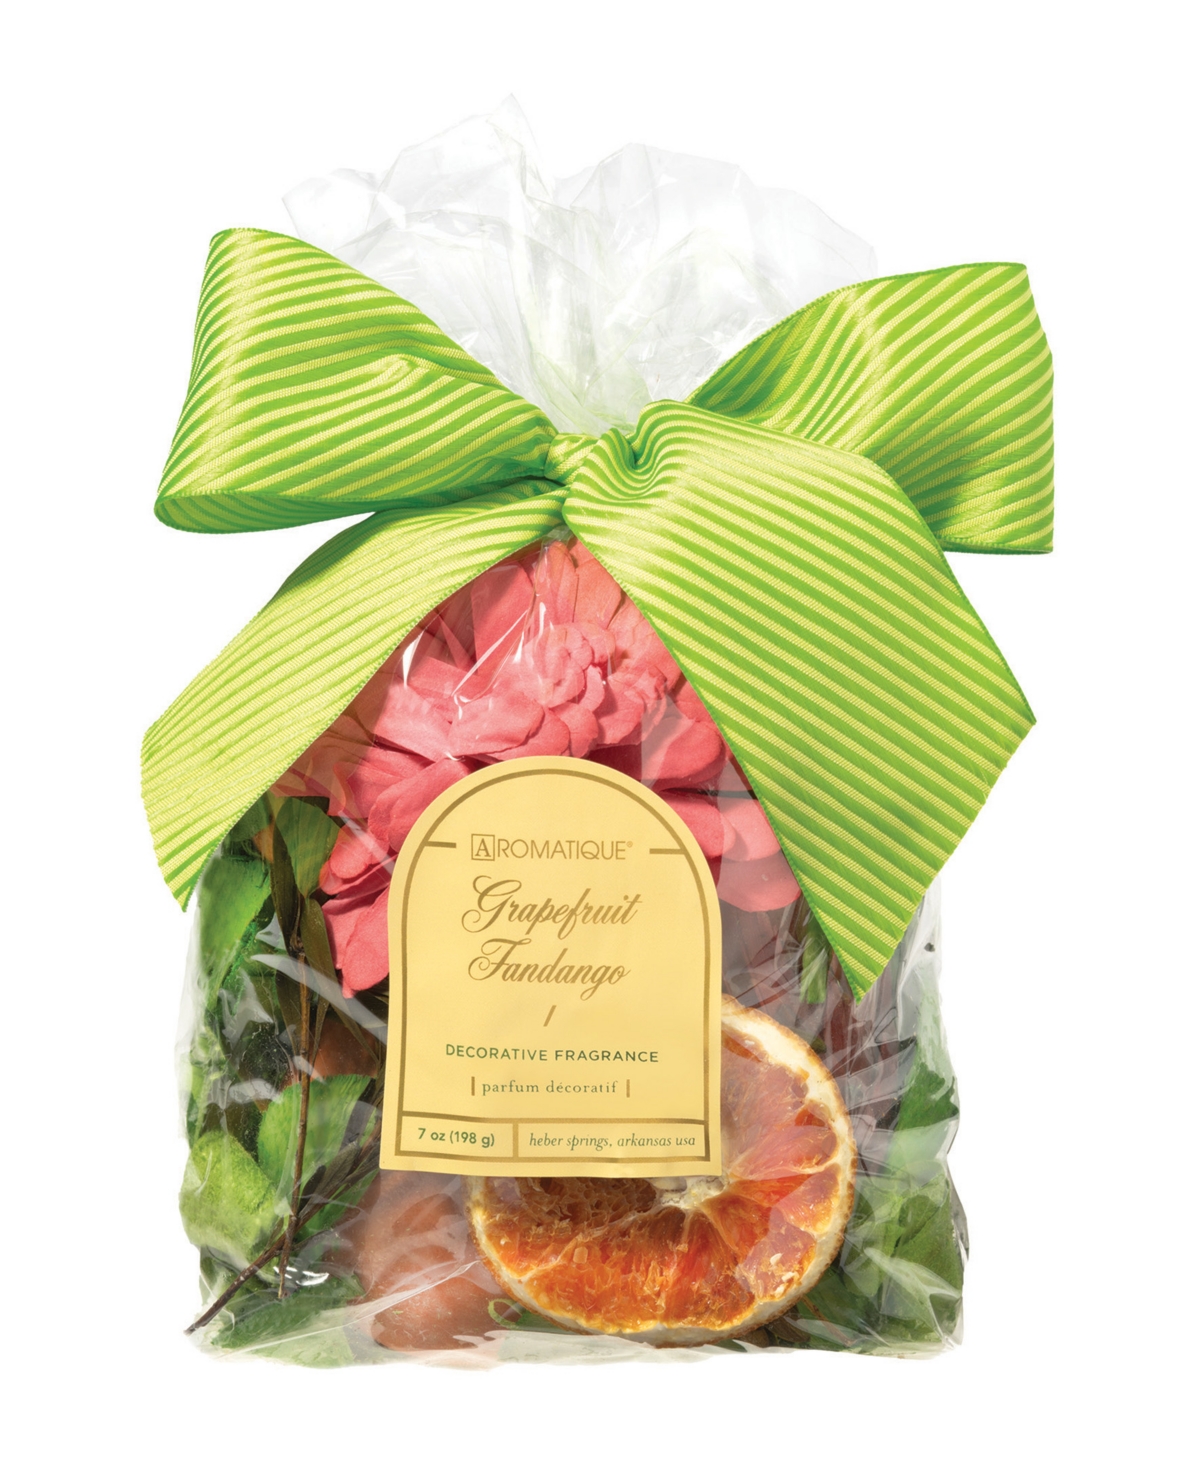 Grapefruit Fandango Standard Decorative Fragrance Bag - Light Green